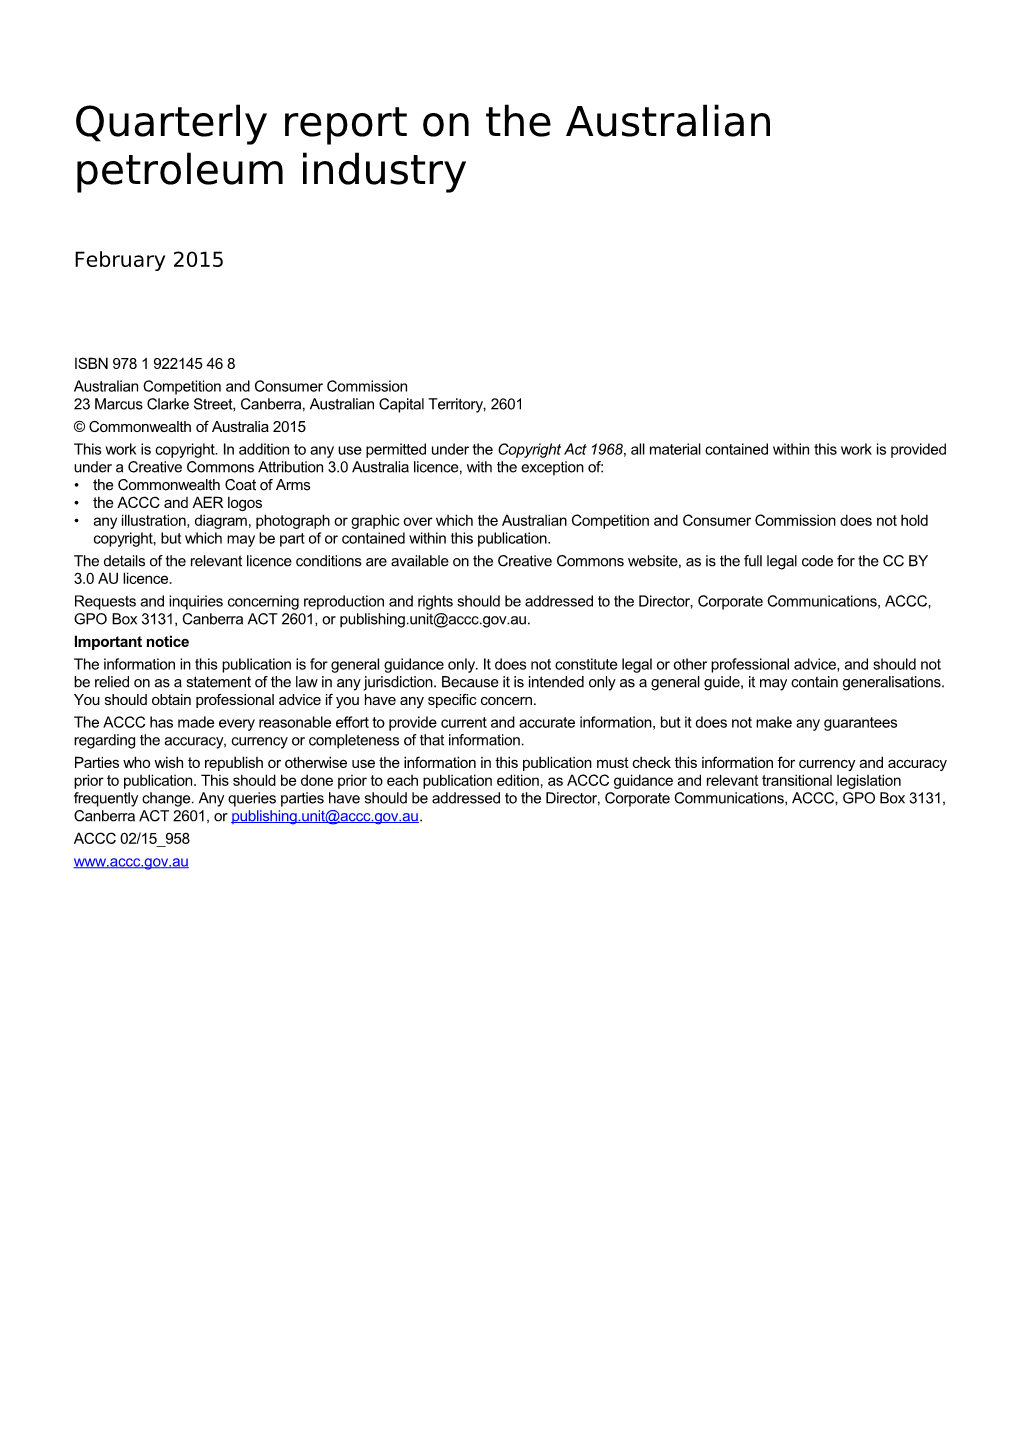 Quarterly Report on the Australian Petroleum Industry